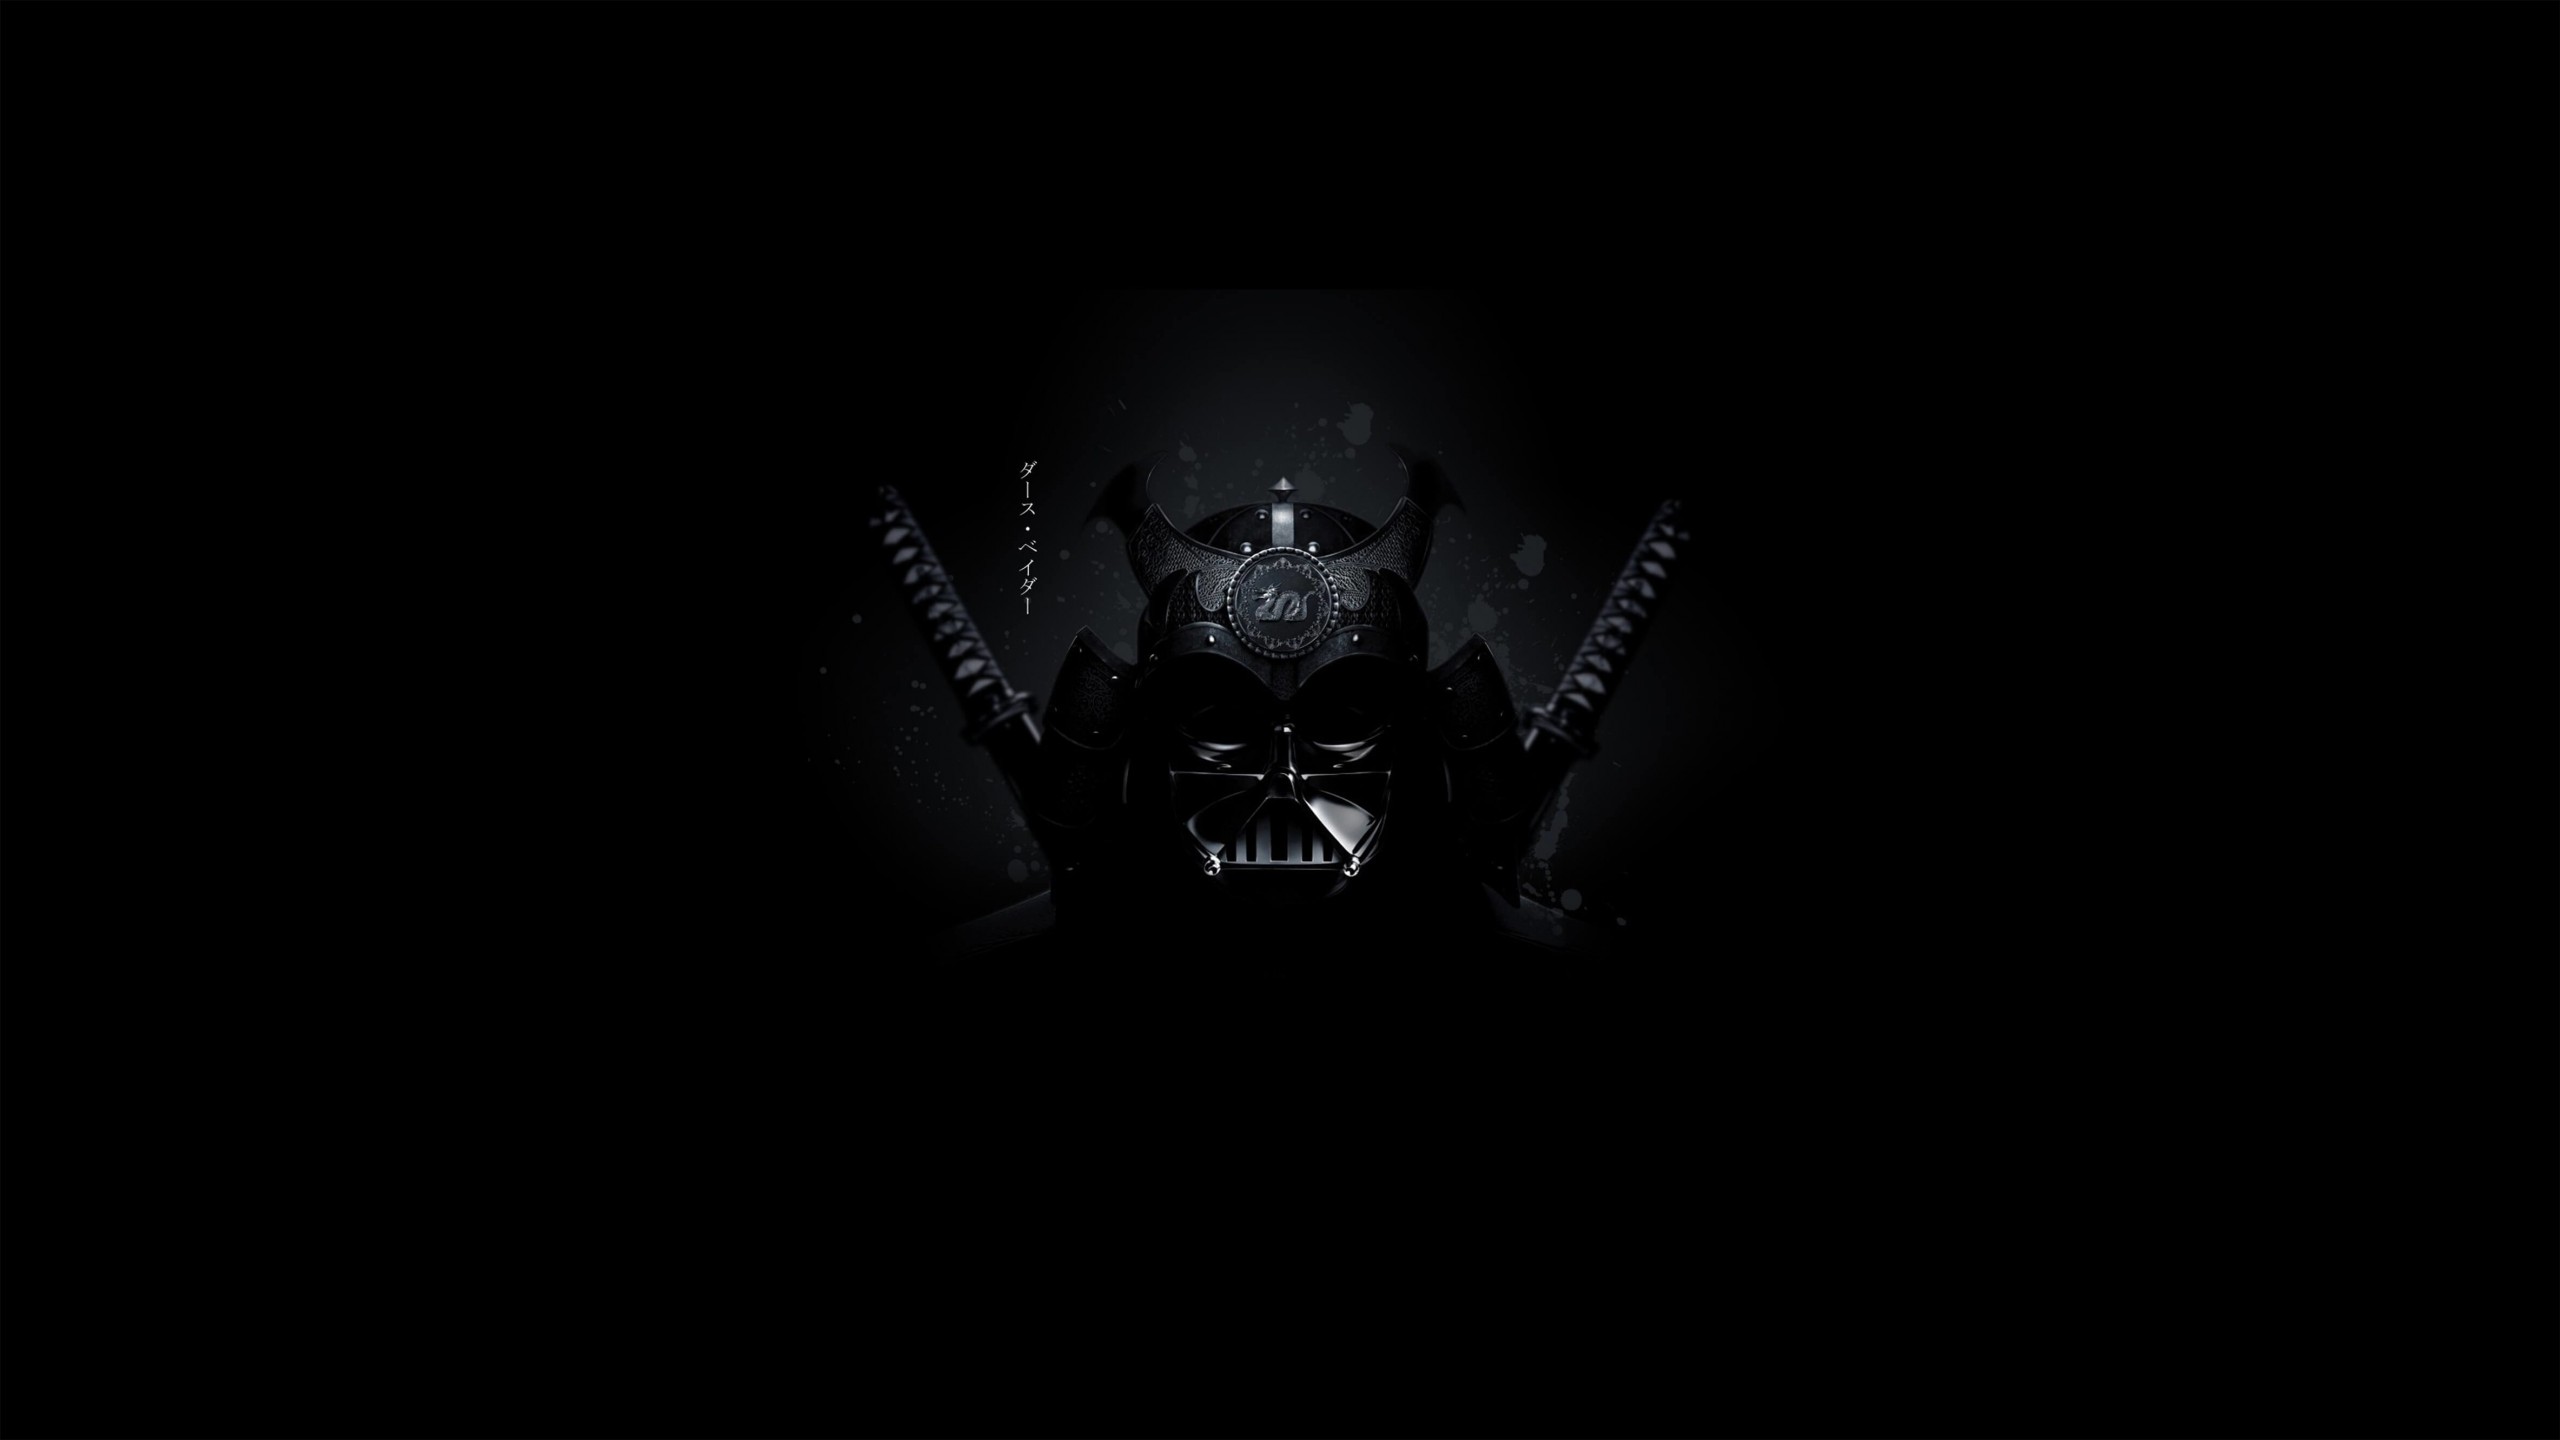 Samurai Darth Vader Wallpaper for Social Media YouTube Channel Art